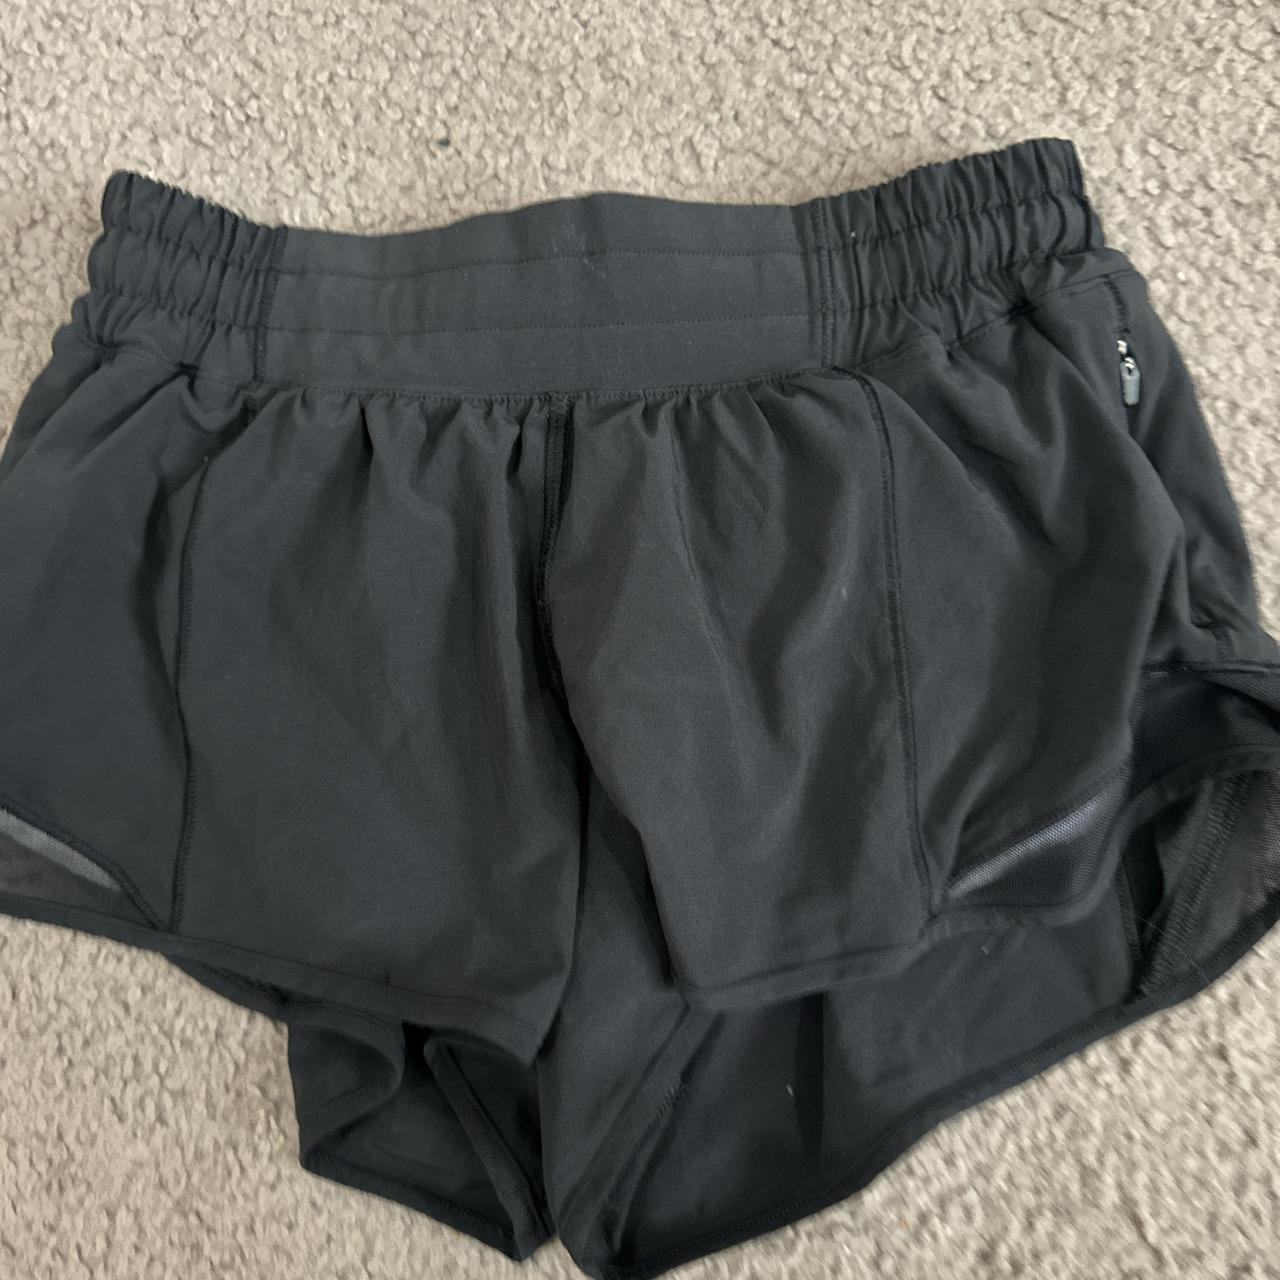 Black Lululemon shorts size 0 very comfortable 2.5 - Depop